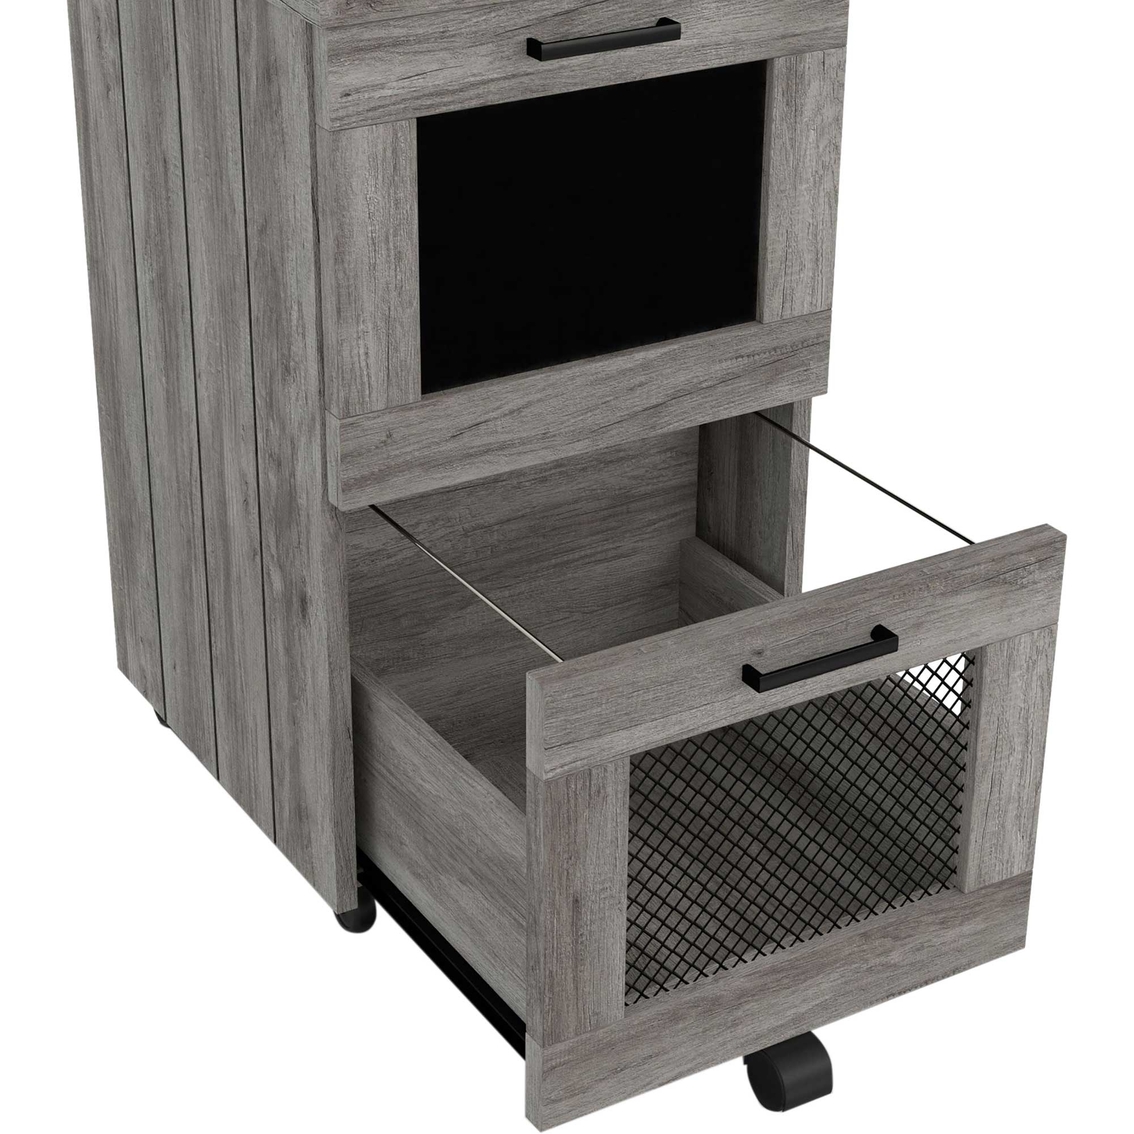 Furniture of America Kalamara File Cabinet - Image 2 of 2